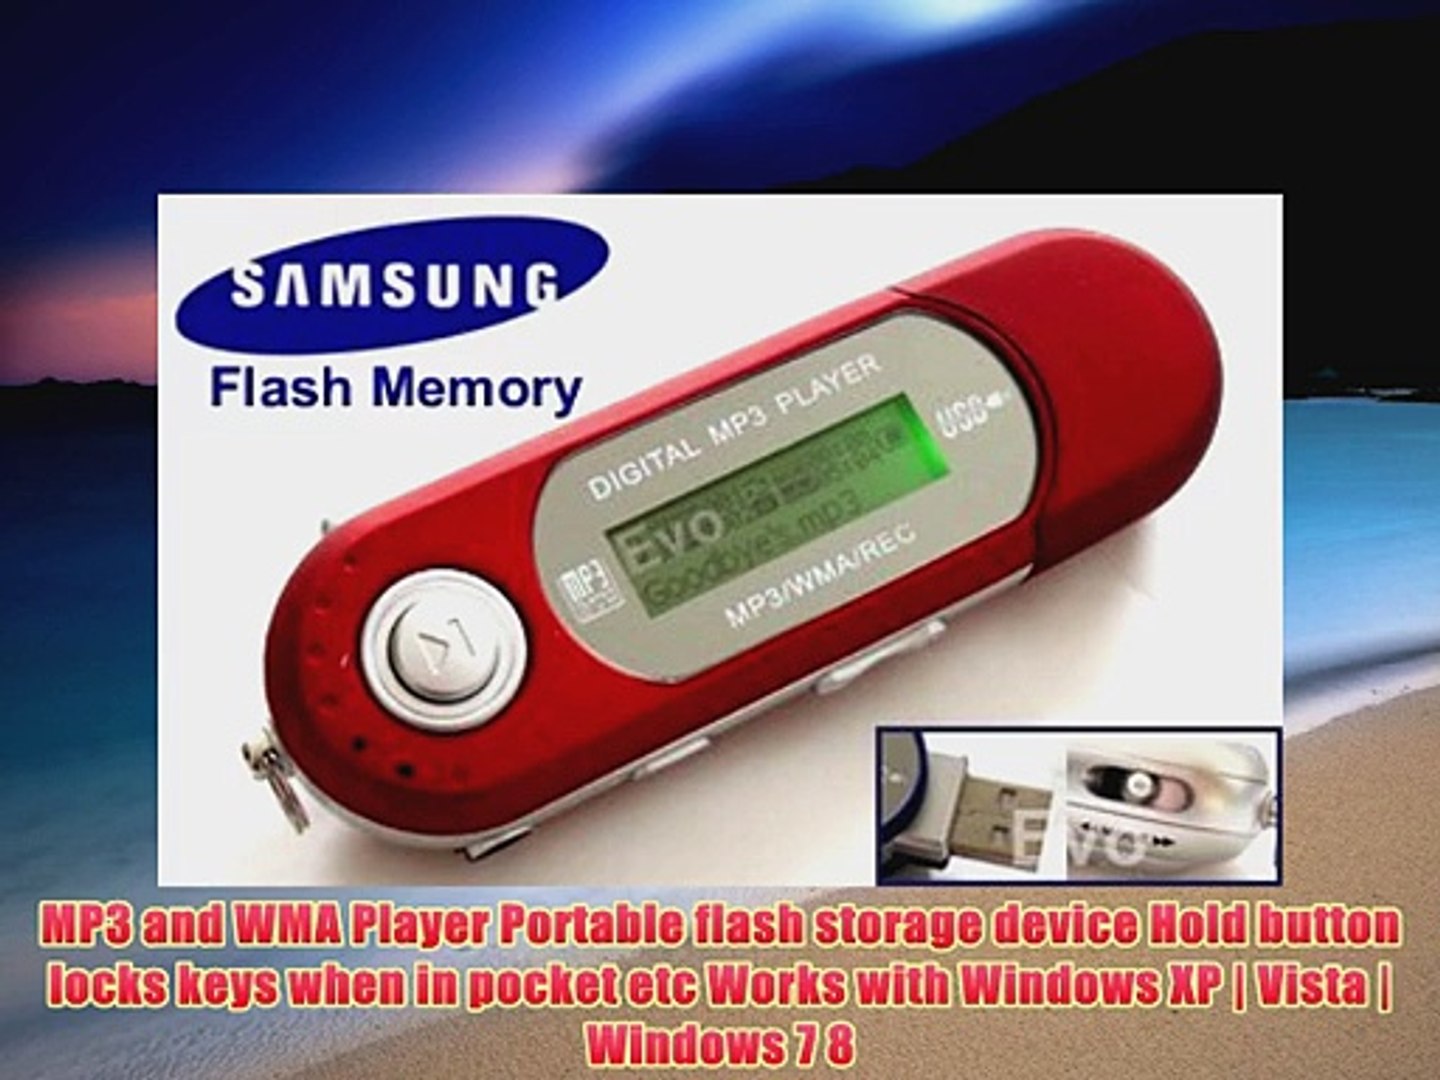 verzekering vervolgens straffen EvoDigitals 8GB Red MP3 WMA Player samsung memory USB With FM Tuner Voice  Recorder More - video Dailymotion